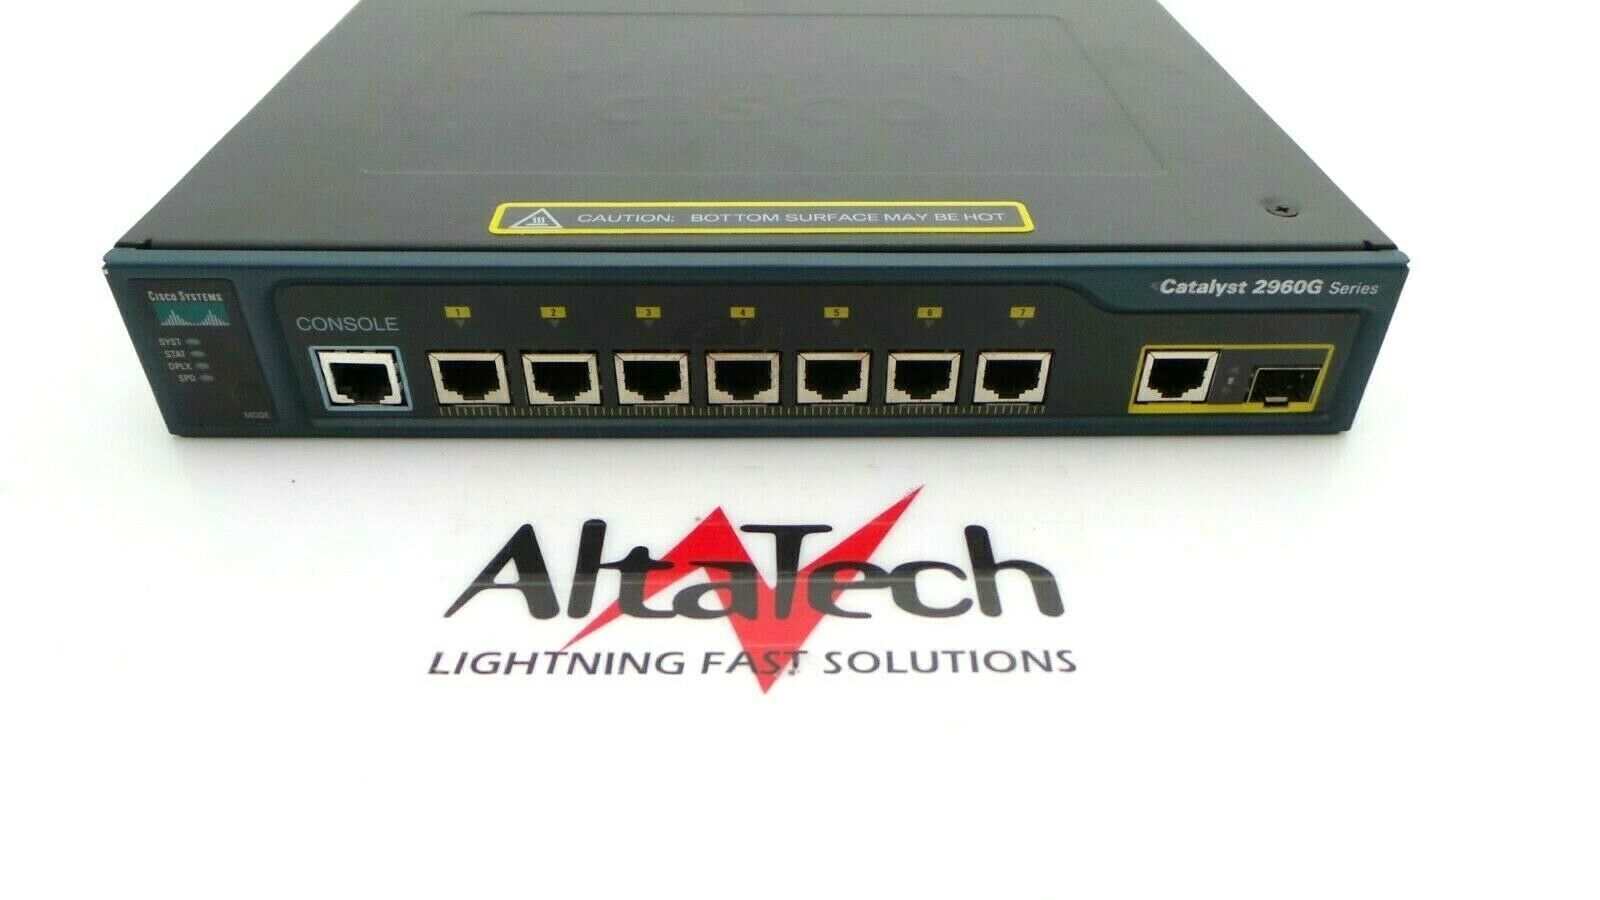 Cisco WS-C2960G-8TC-L Catalyst 2690G 8 Port 1GB SFP Network Switch